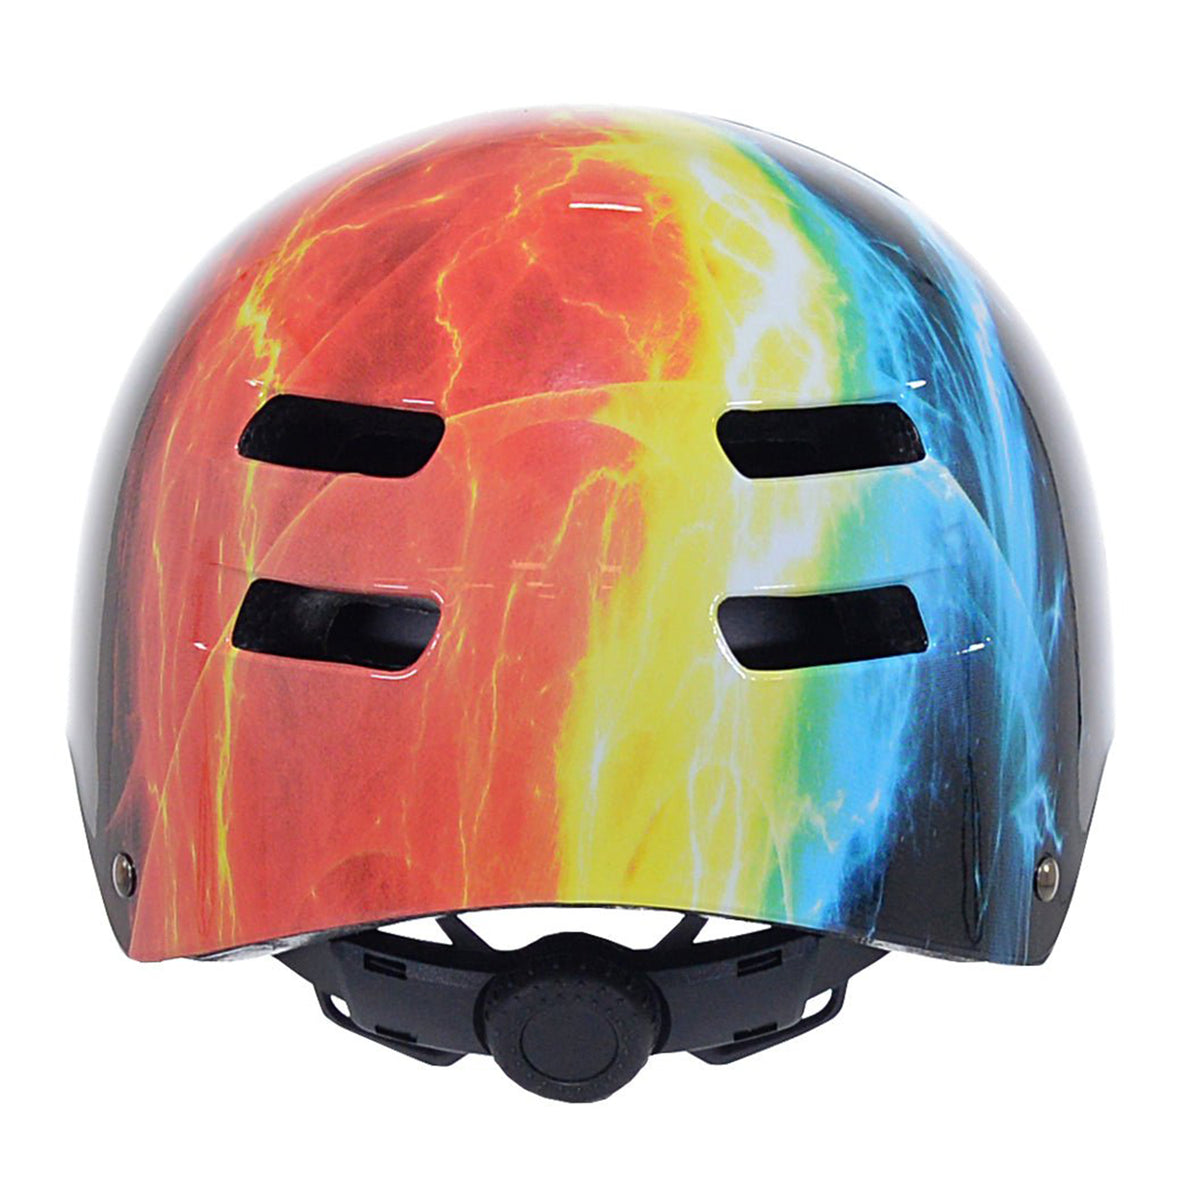 Kent Fire & Ice Youth Multi-Sport Helmet | Helmet for Kids Ages 8+